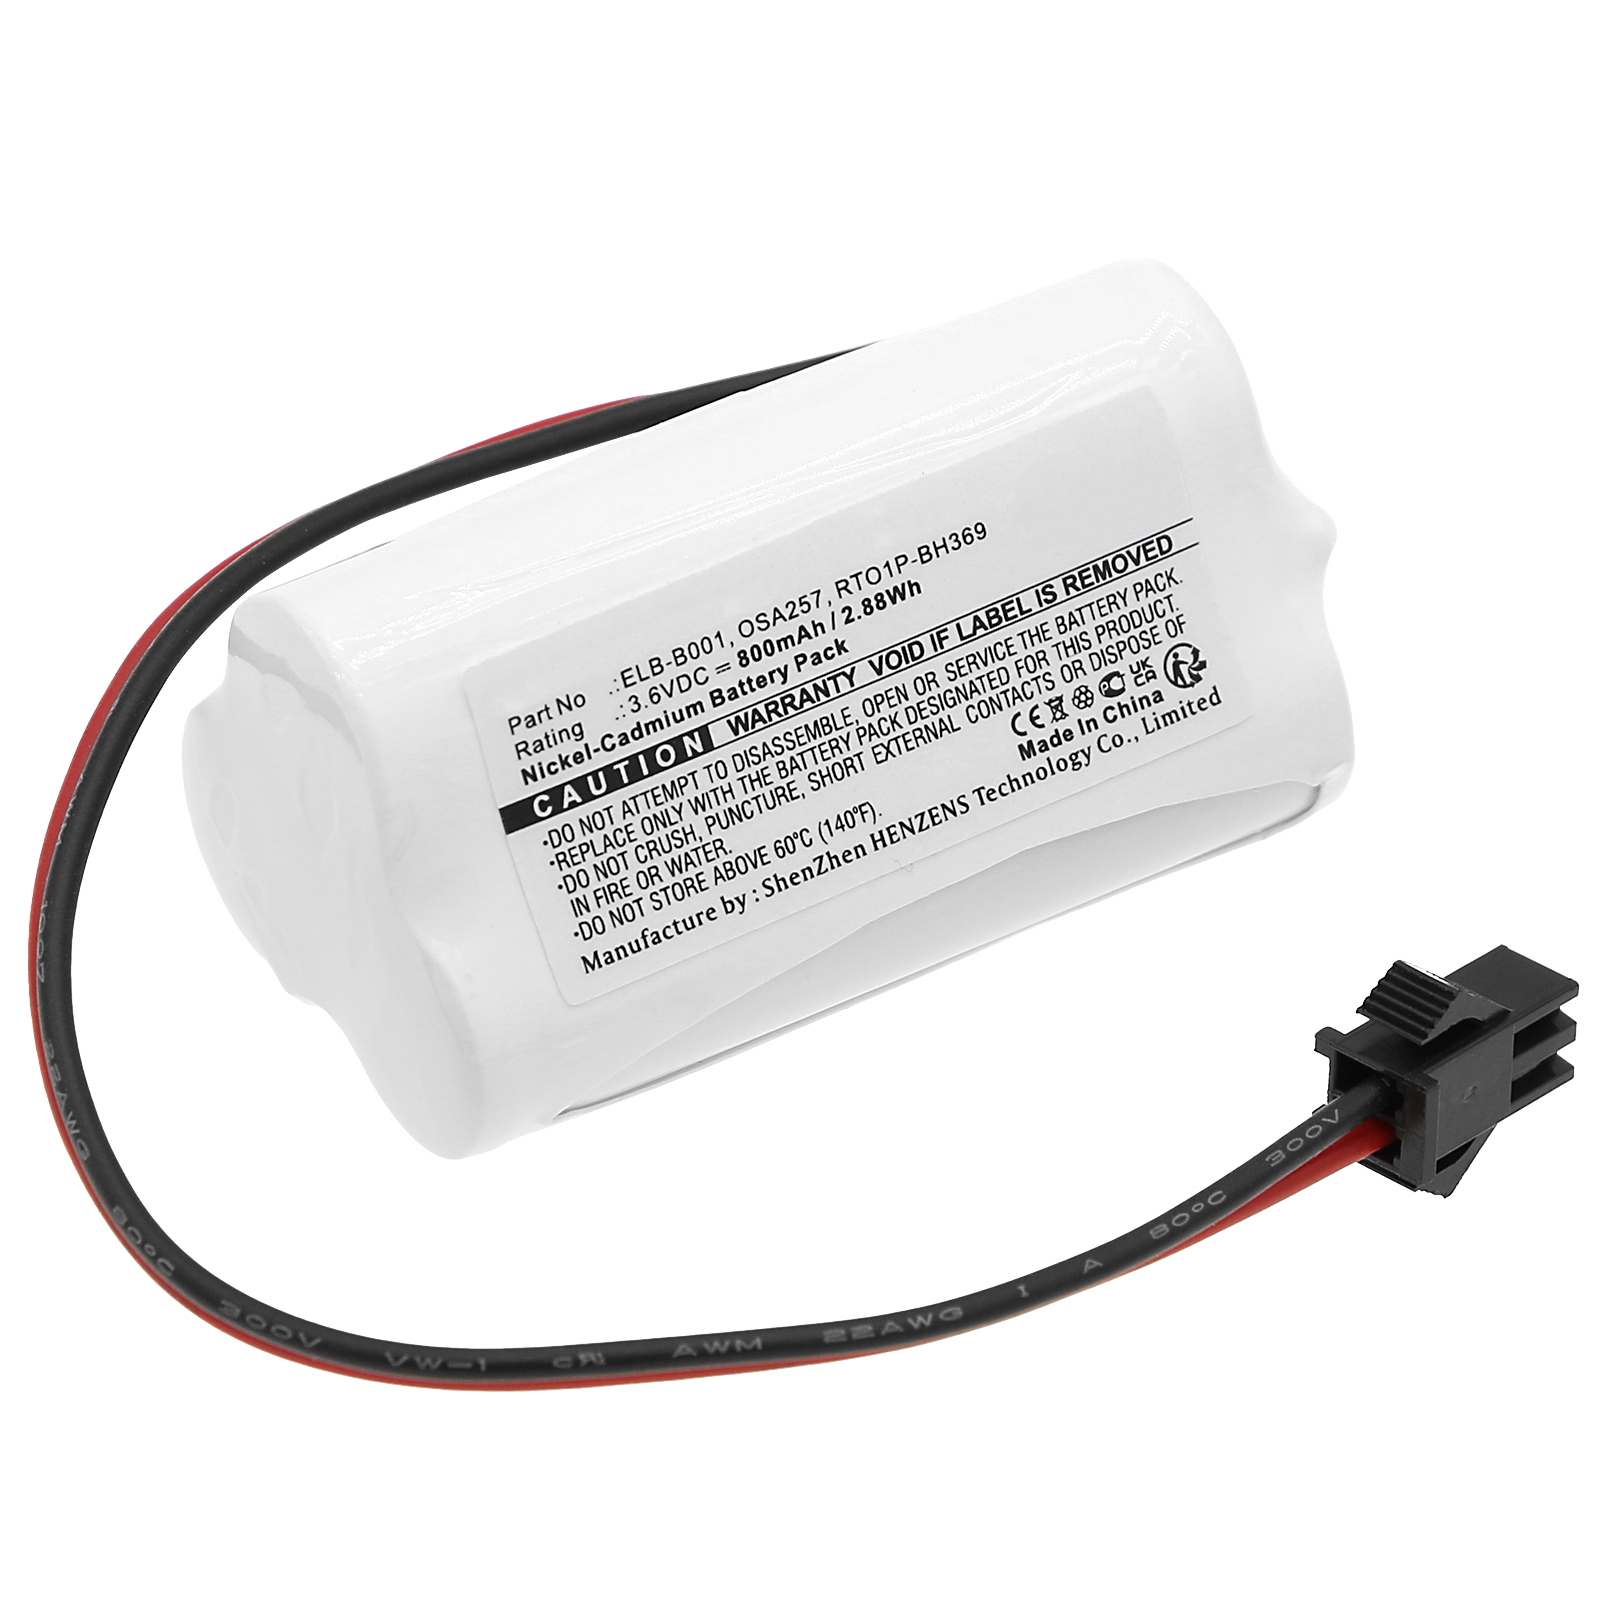 Synergy Digital Emergency Lighting Battery, Compatible with Lithonia ELB-B001 Emergency Lighting Battery (Ni-CD, 3.6V, 800mAh)